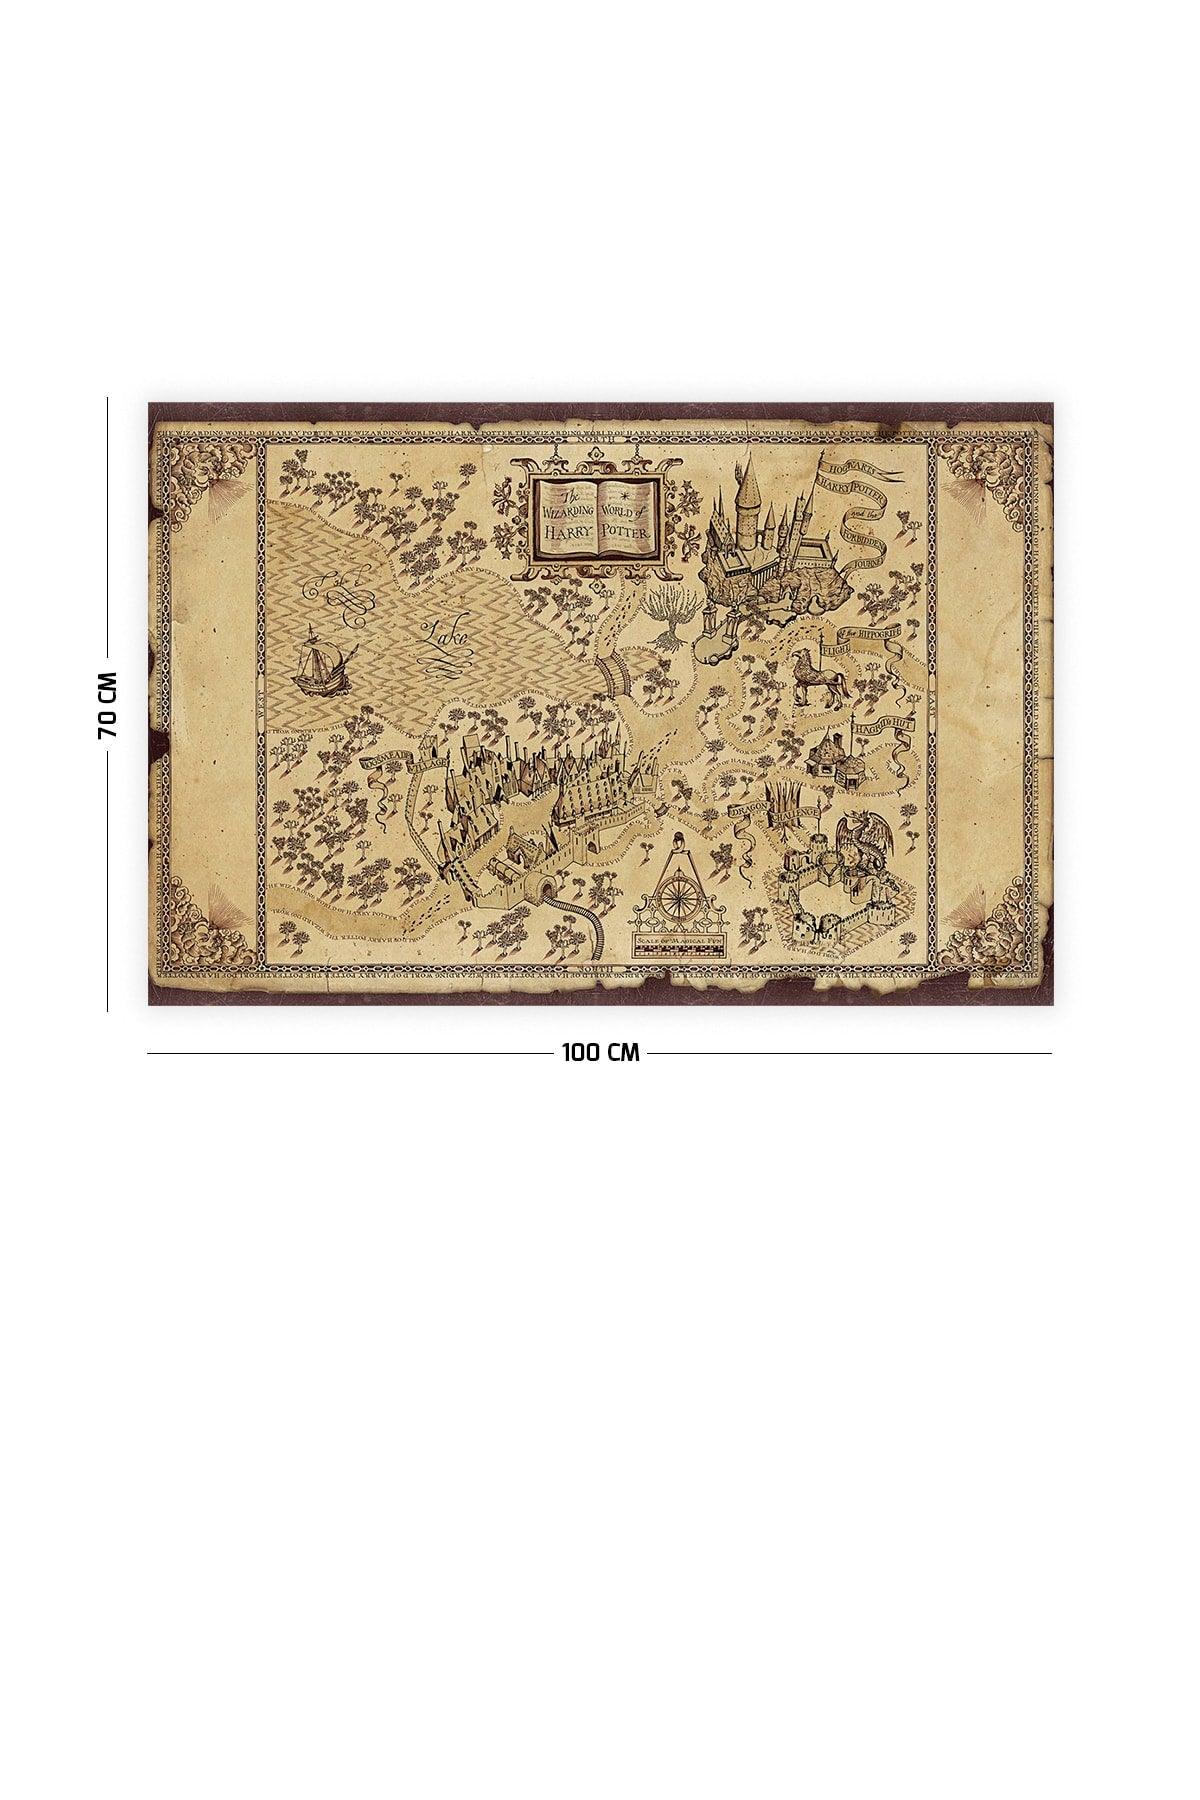 Harry Potter Marauder Map Wall Covering Carpet 140 X 100 Cm-70x100 Cm - Swordslife